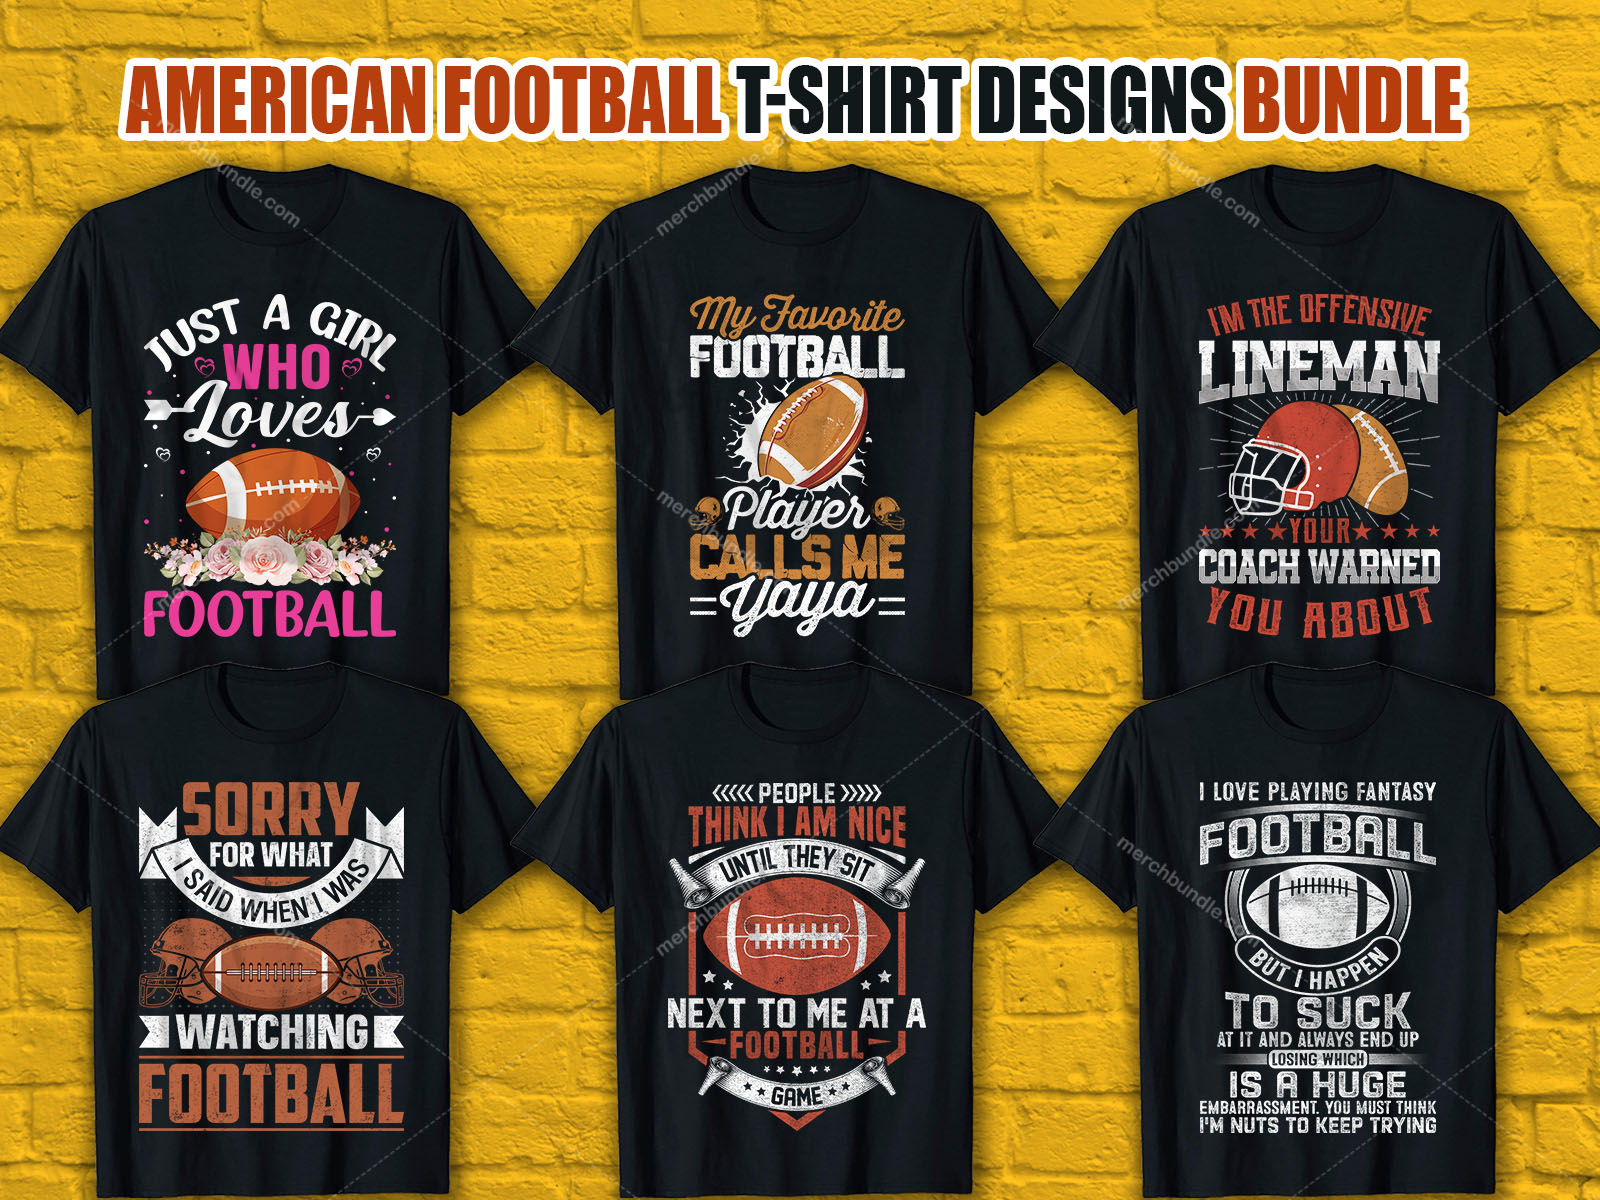 American Football T-shirt Design Graphic by Creative Merch